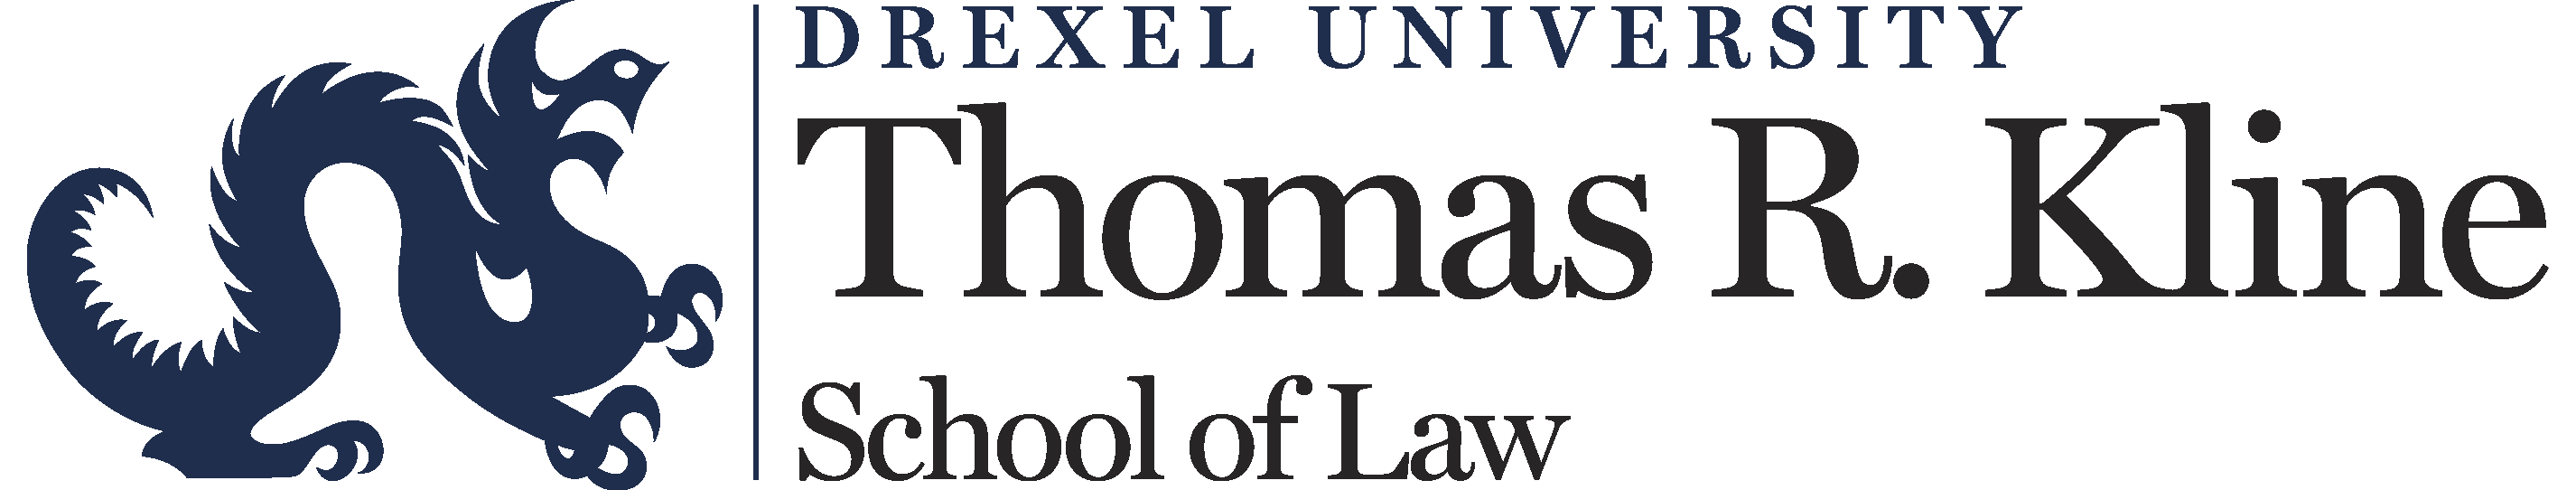 Drexel University Thomas R Kline School of Law logo